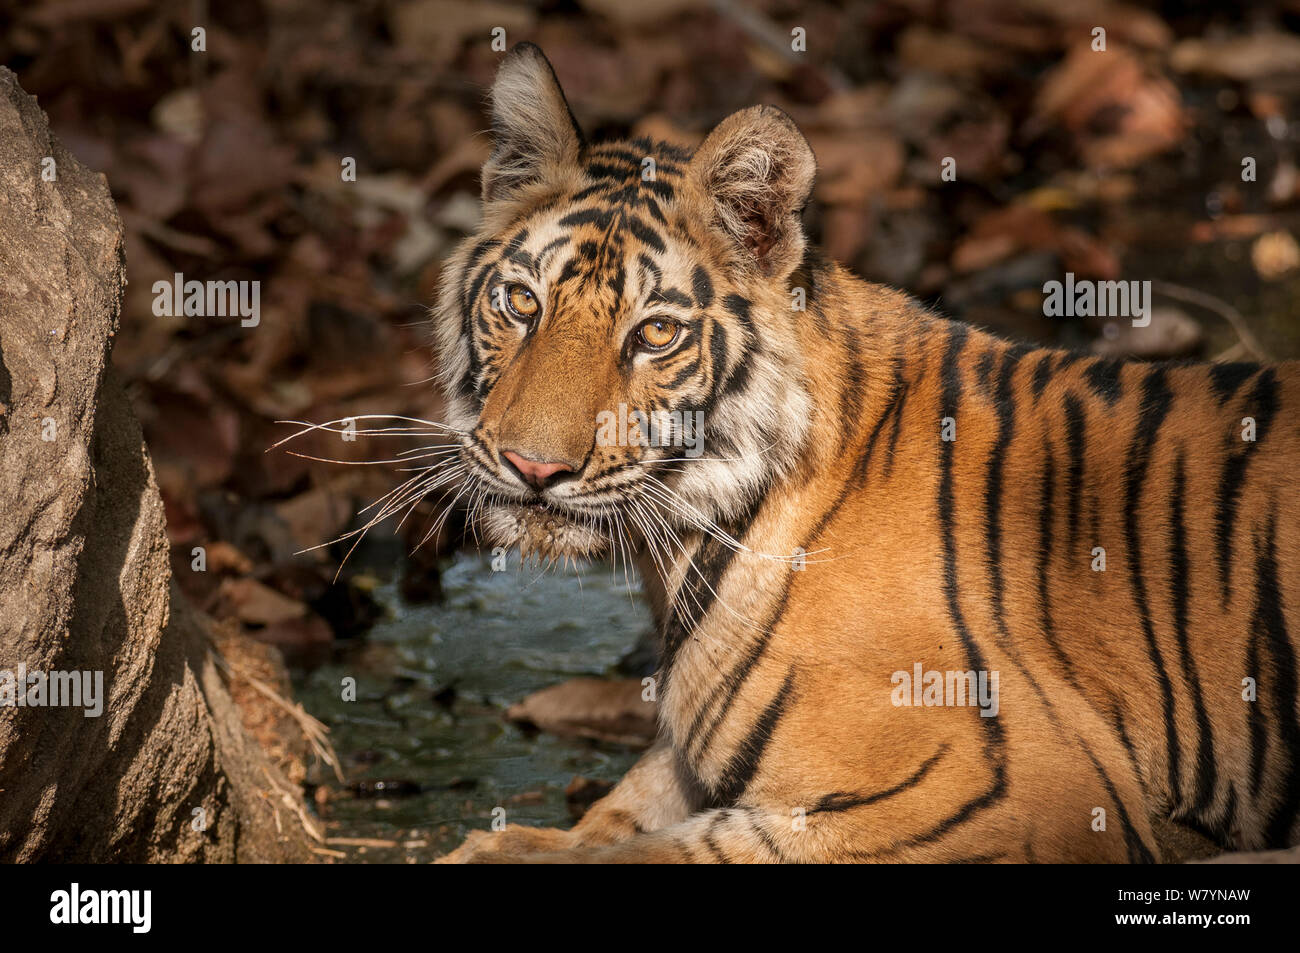 Bengal tiger (Panthera tigris) sub adult, portrait, Bandhavgarh National Park, India. Stock Photo